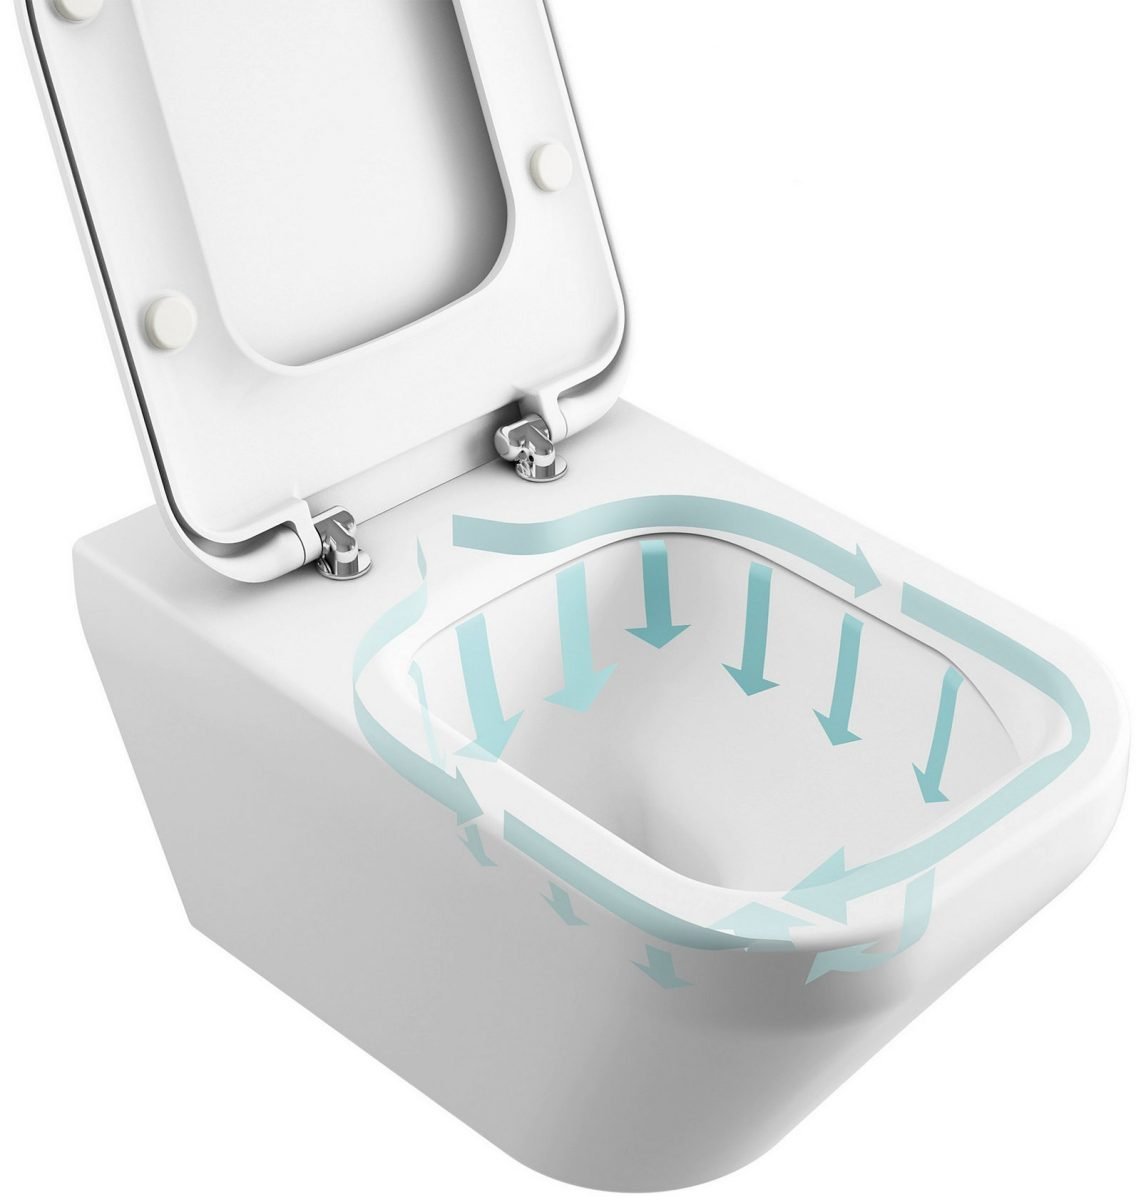 Vaso WC sospeso Cube con sedile softclose Sanitari Bagno